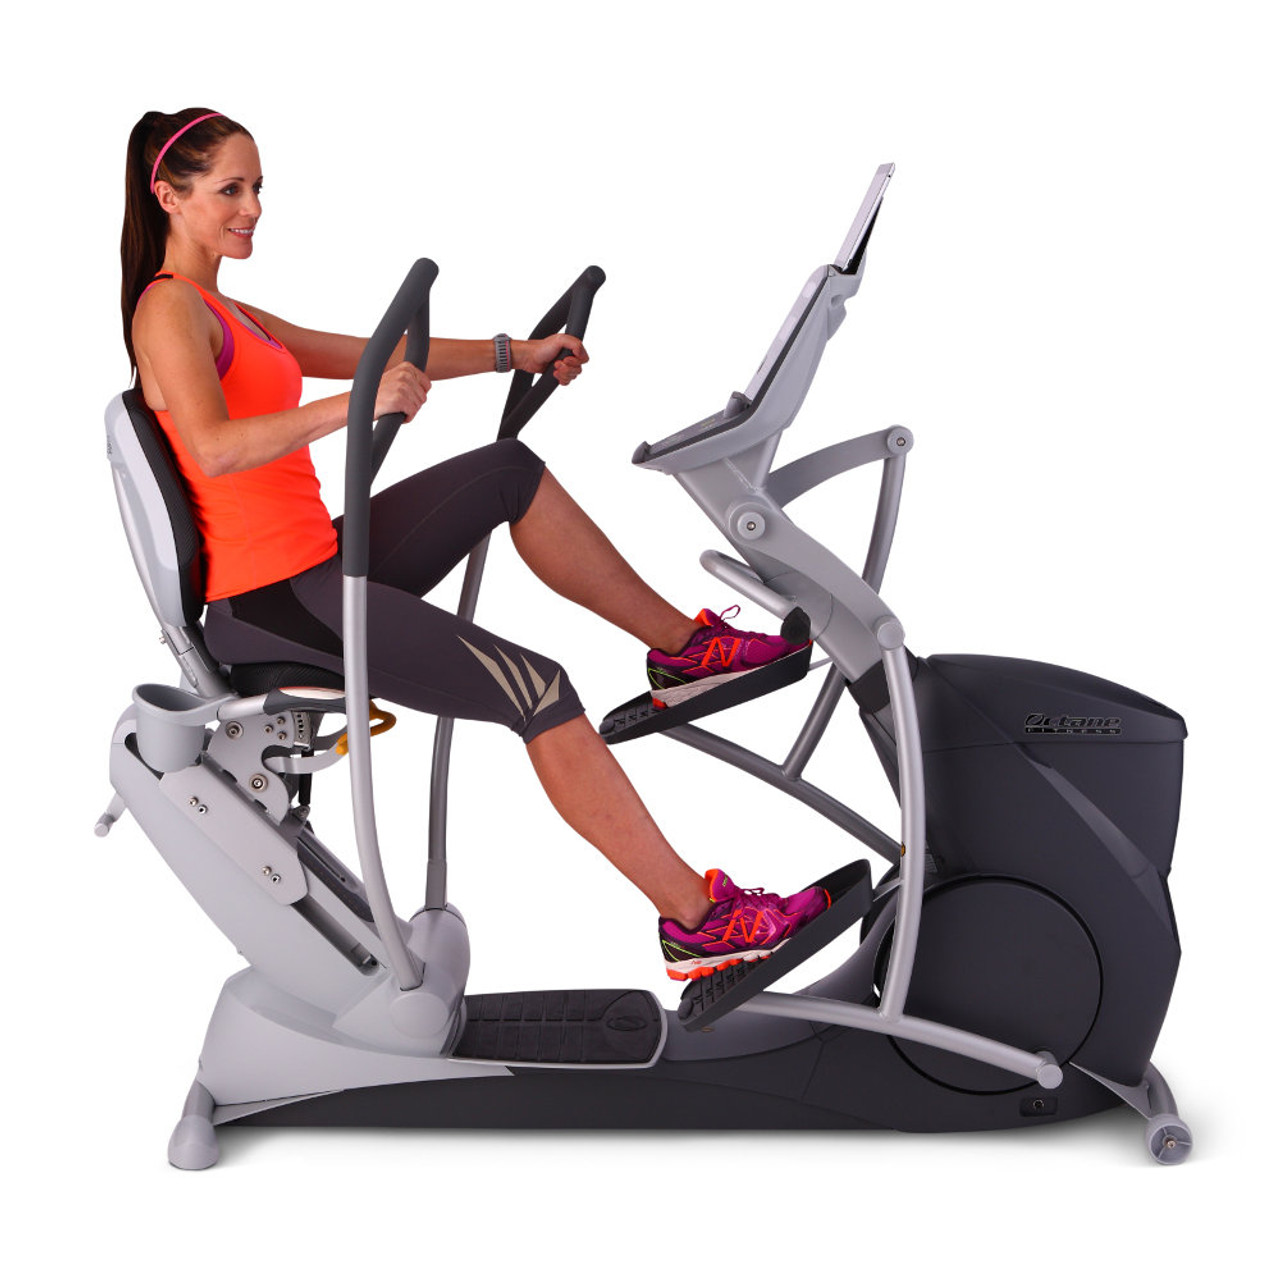 sit down elliptical exercise machine